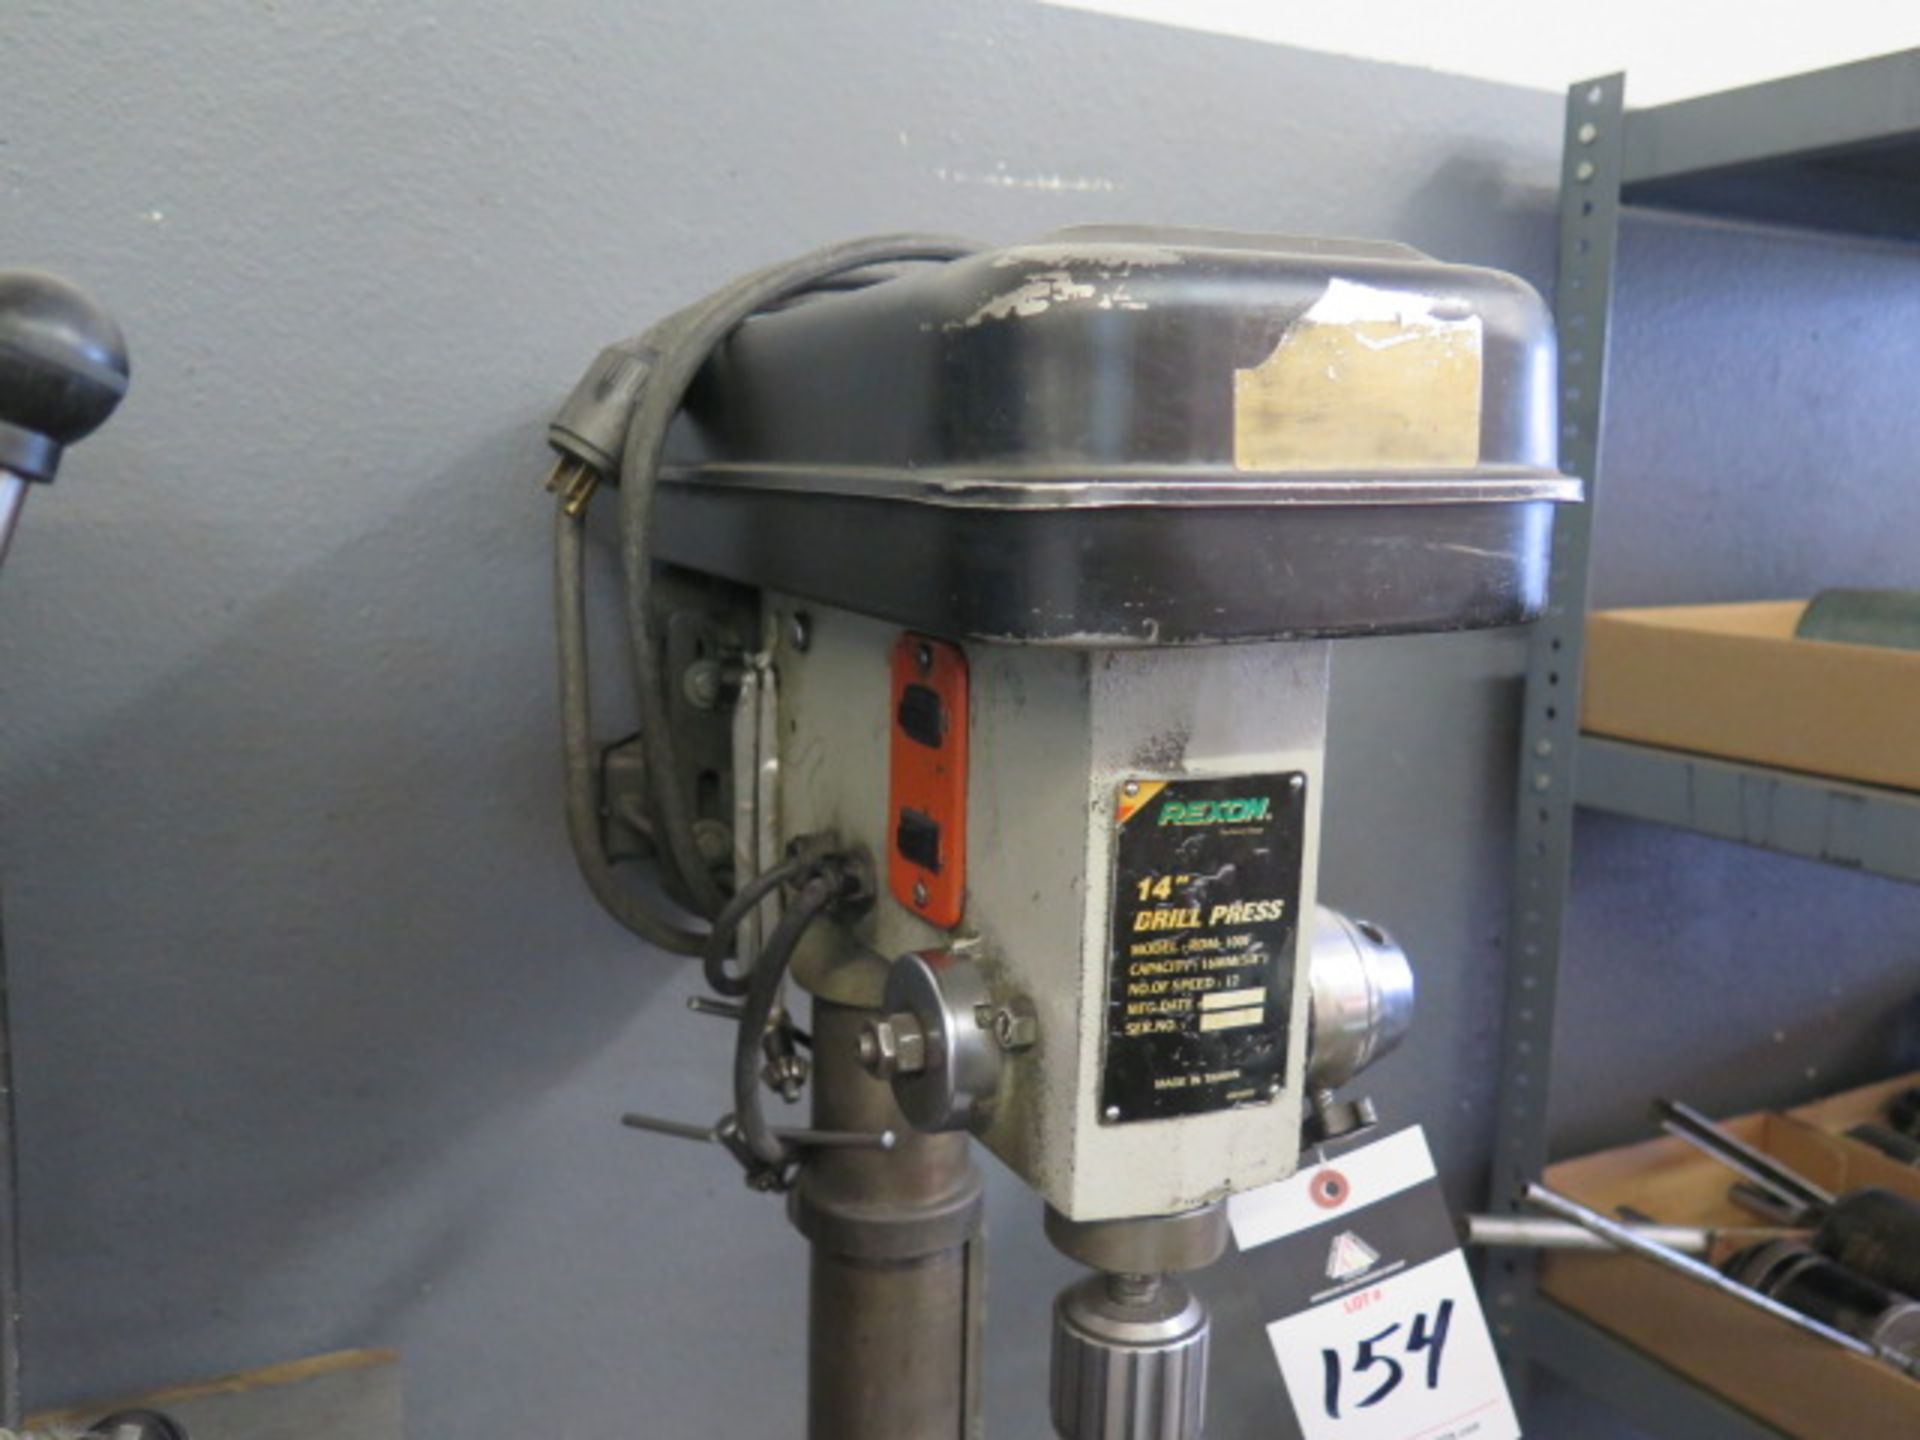 Rexon Pedestal Drill Press - Image 2 of 4